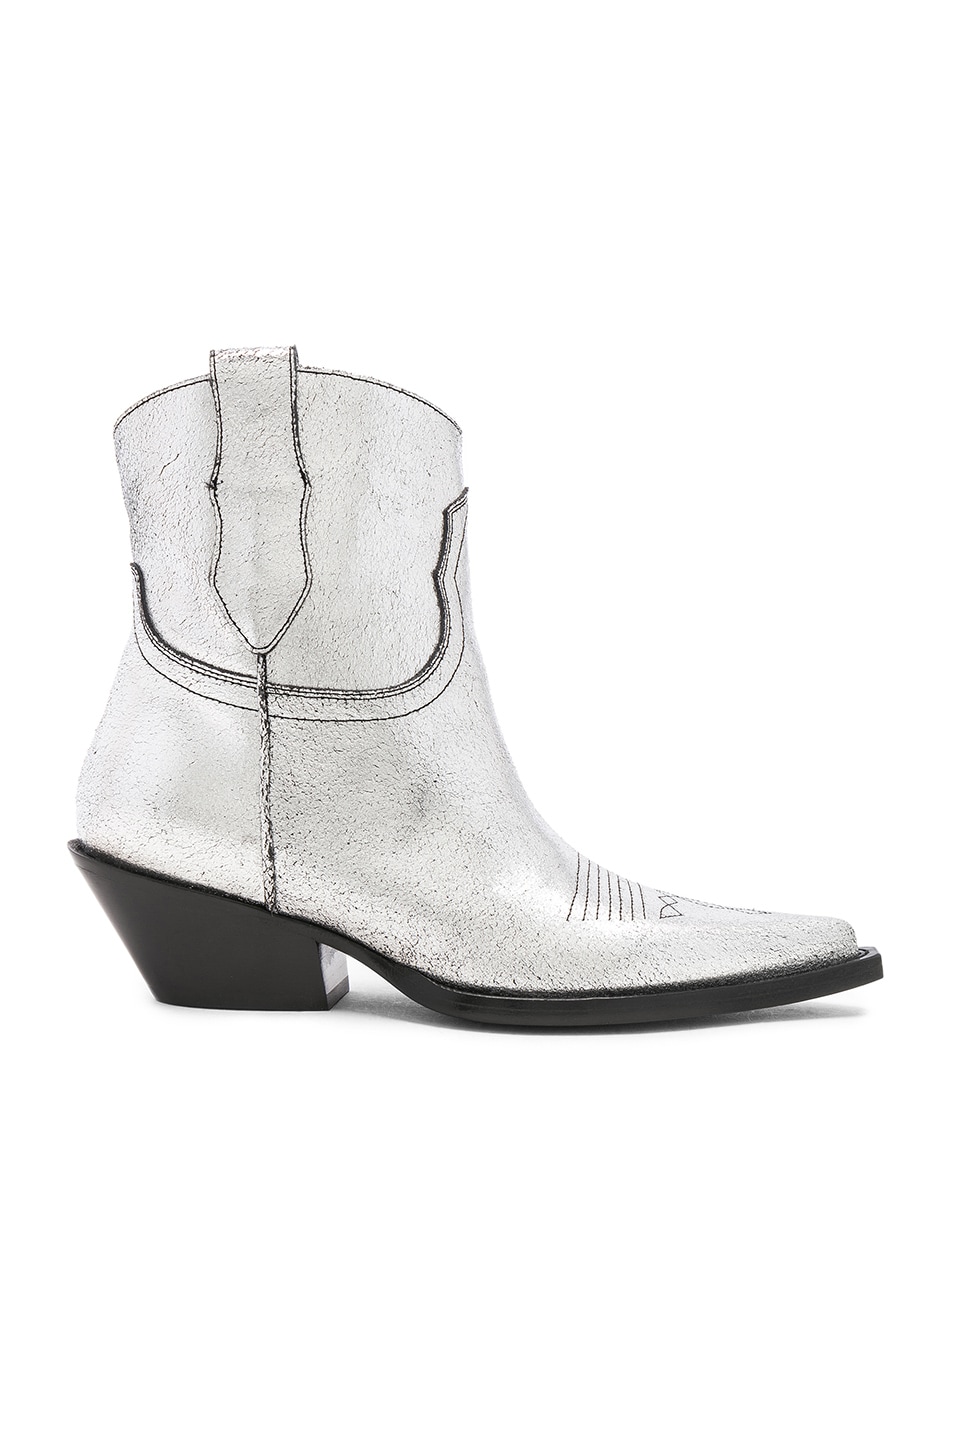 Image 1 of Maison Margiela Metallic Short Western Boots in Silver Birch & Black